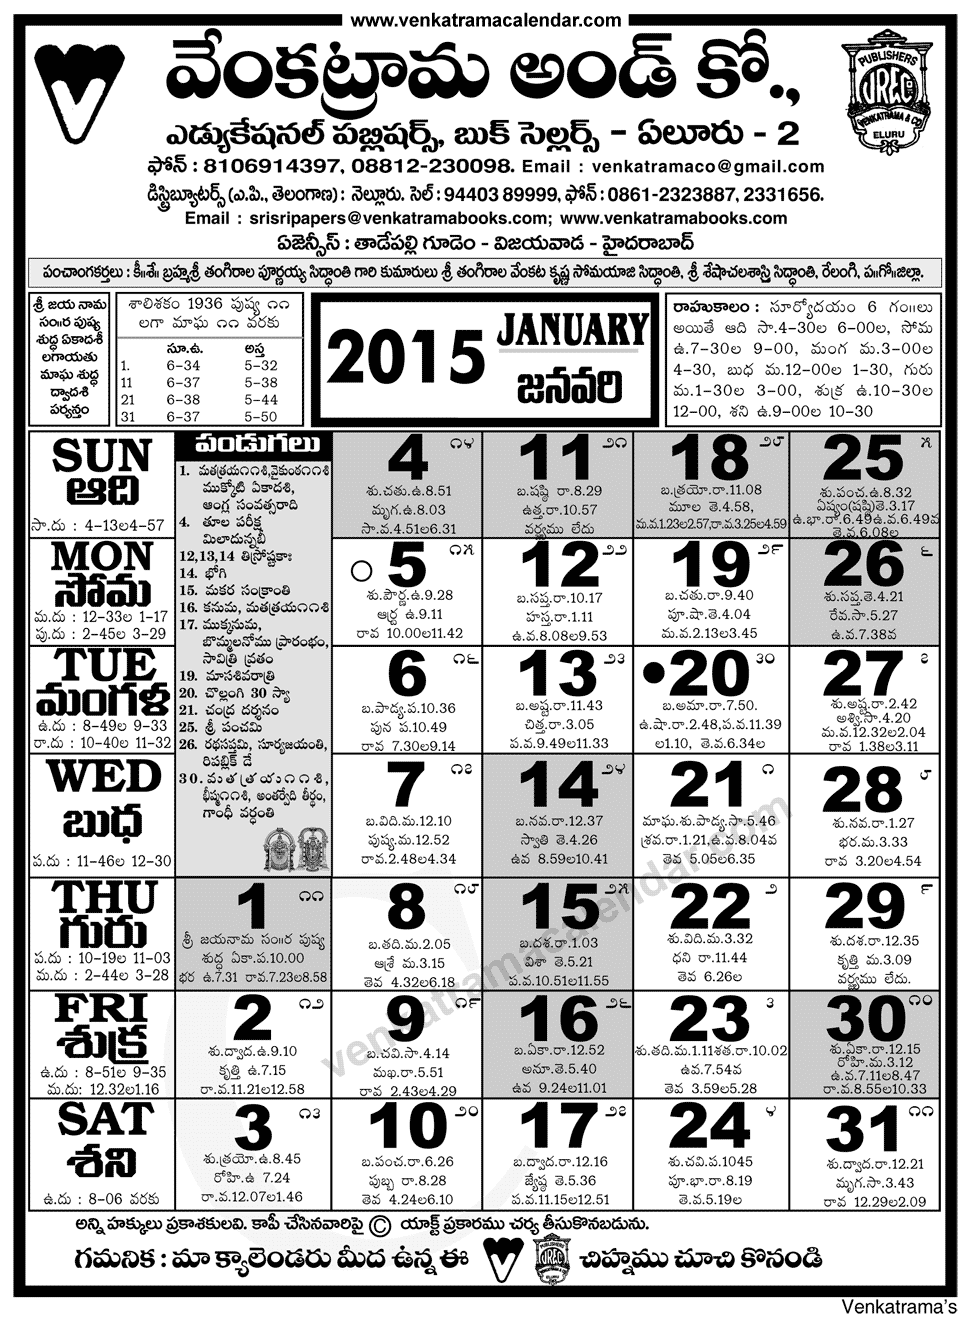 venkatrama-co-calendar-2014-venkatrama-co-2015-january-telugu-calendar